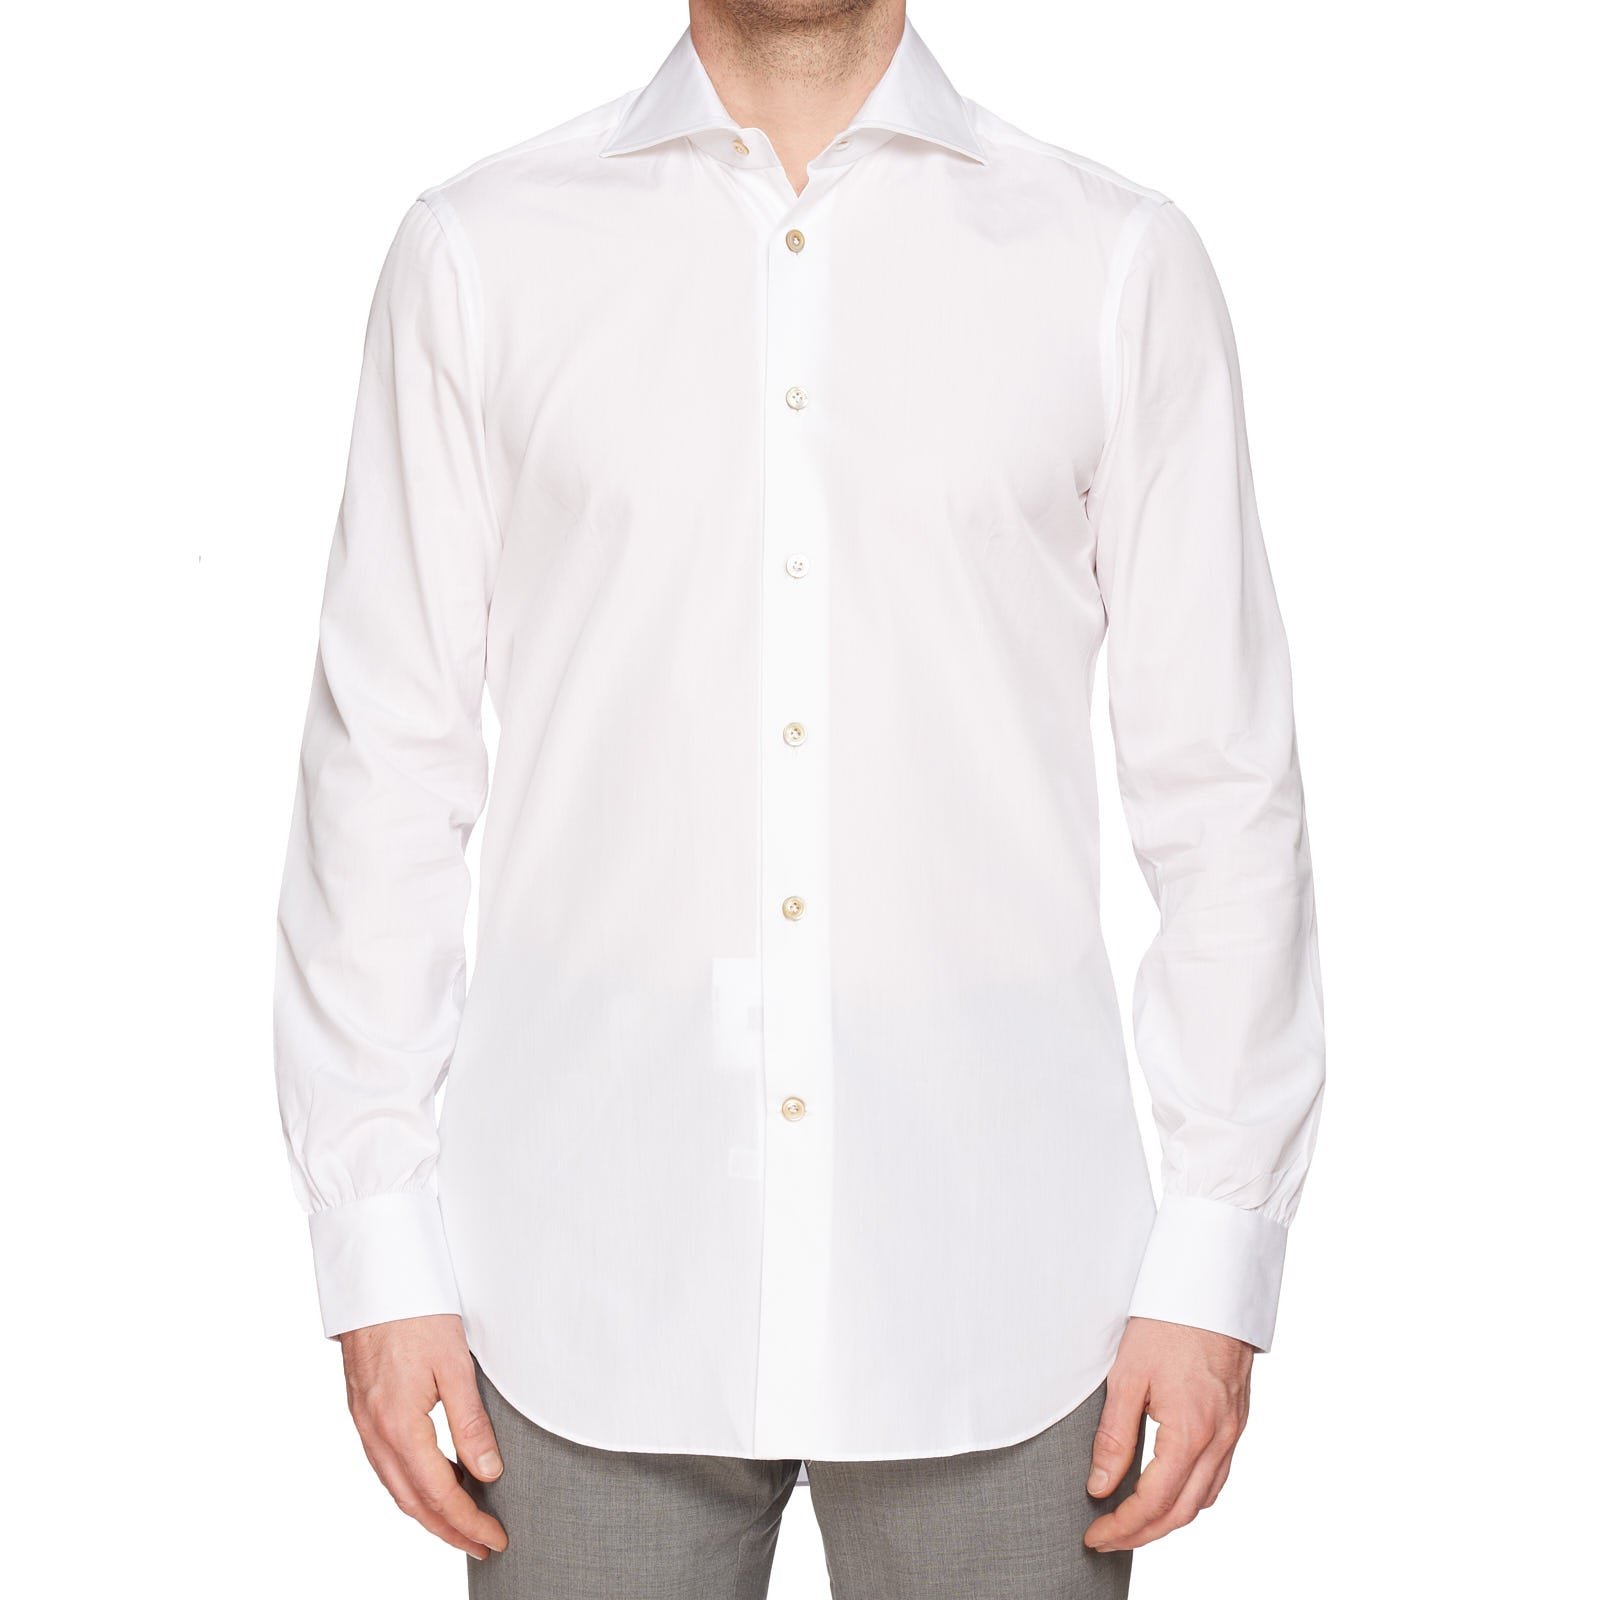 KITON Napoli Handmade White Cotton Poplin Dress Shirt EU 39 NEW US 15.5 KITON